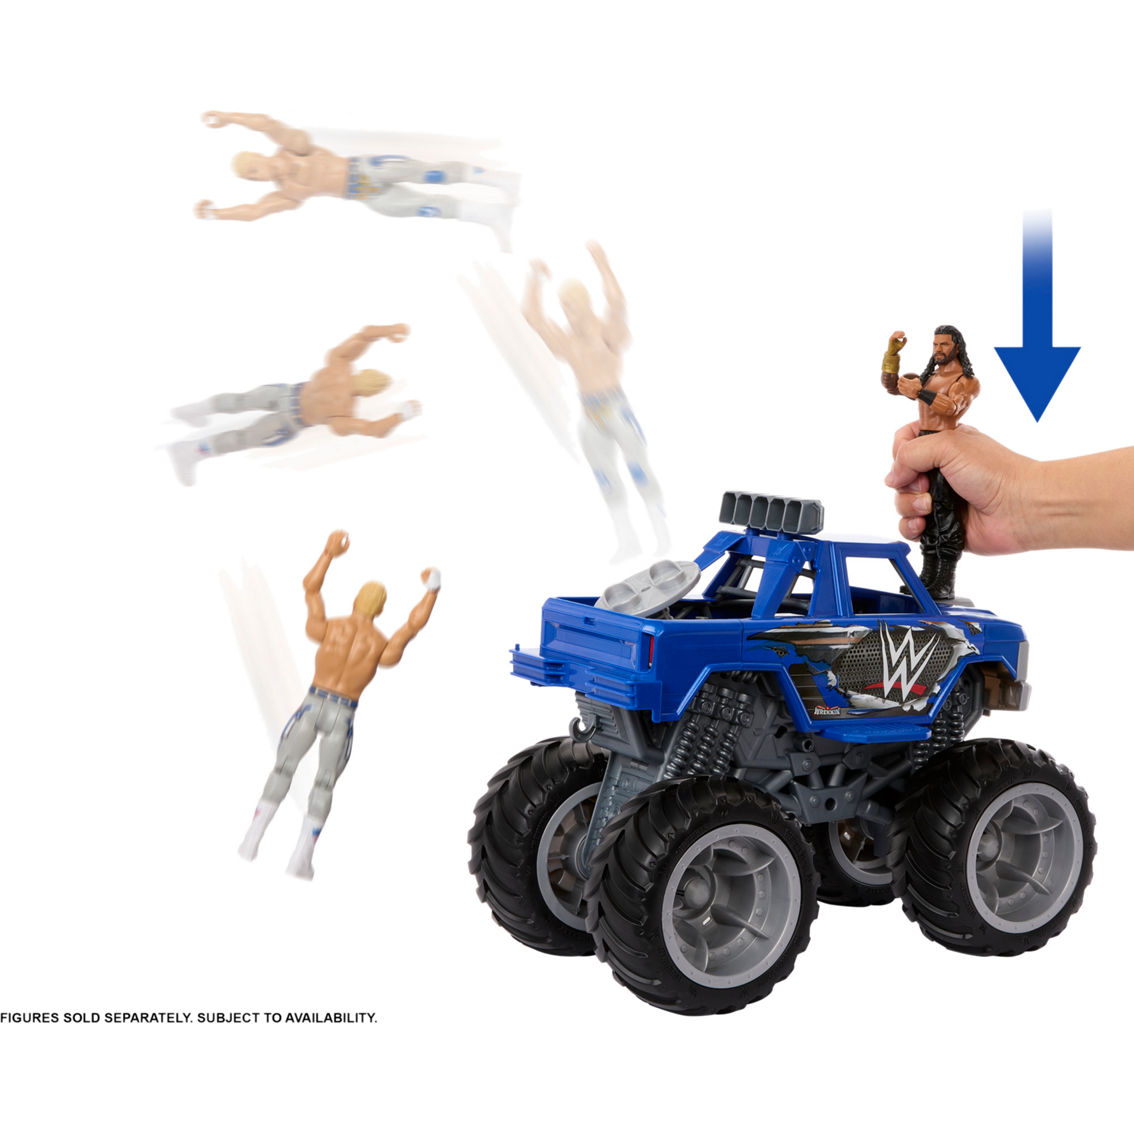 WWE Wrekkin Slam Crusher Monster Truck Toy - Image 6 of 7